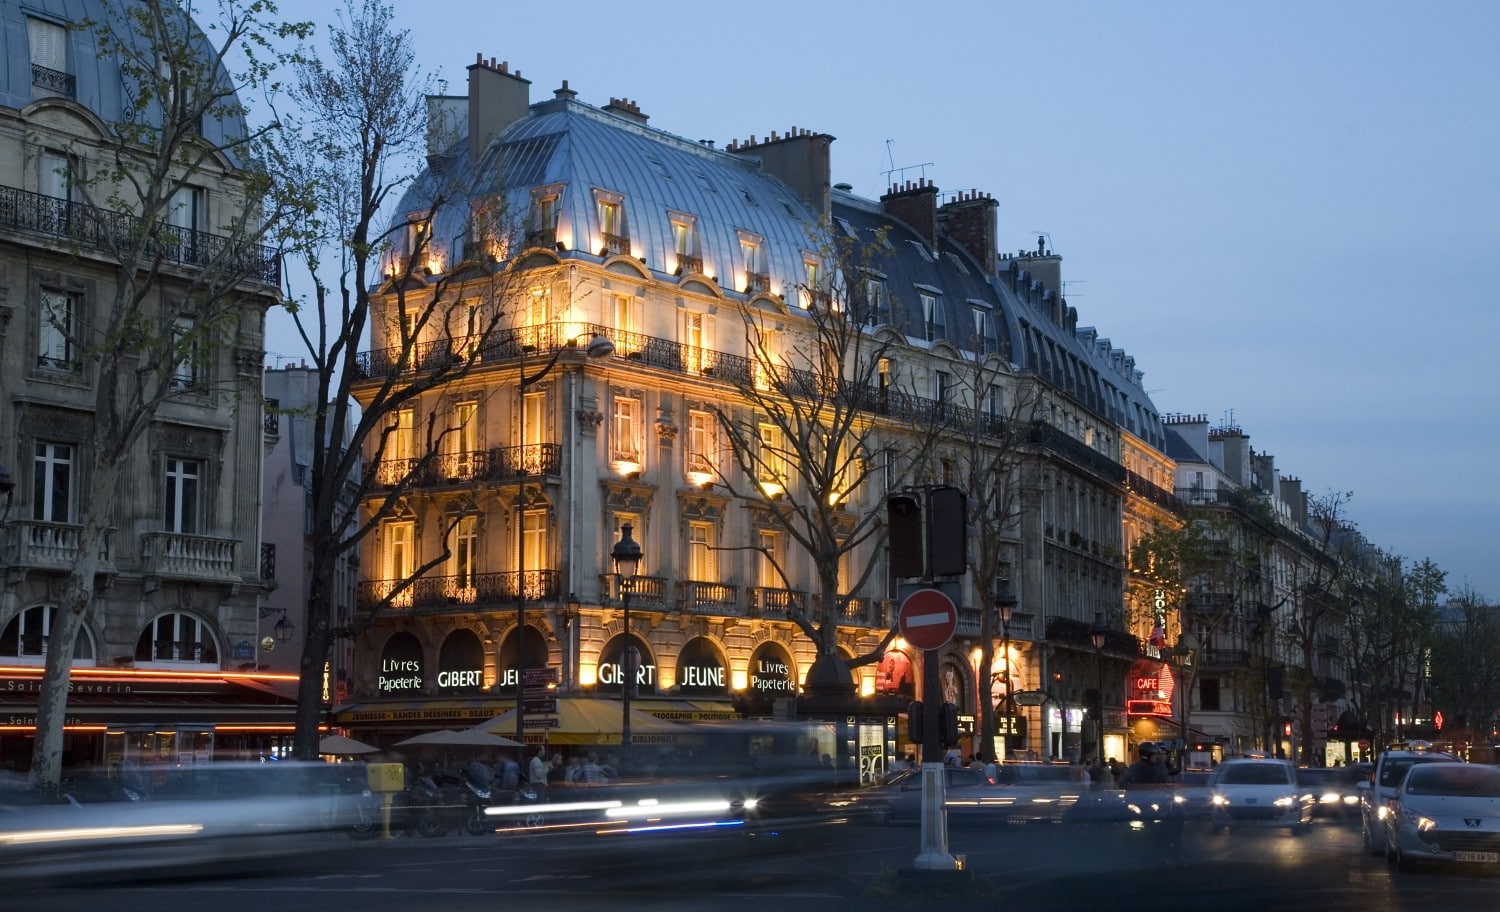 A Street scene in the Rive Gauche, Boulevard St Germain, Paris